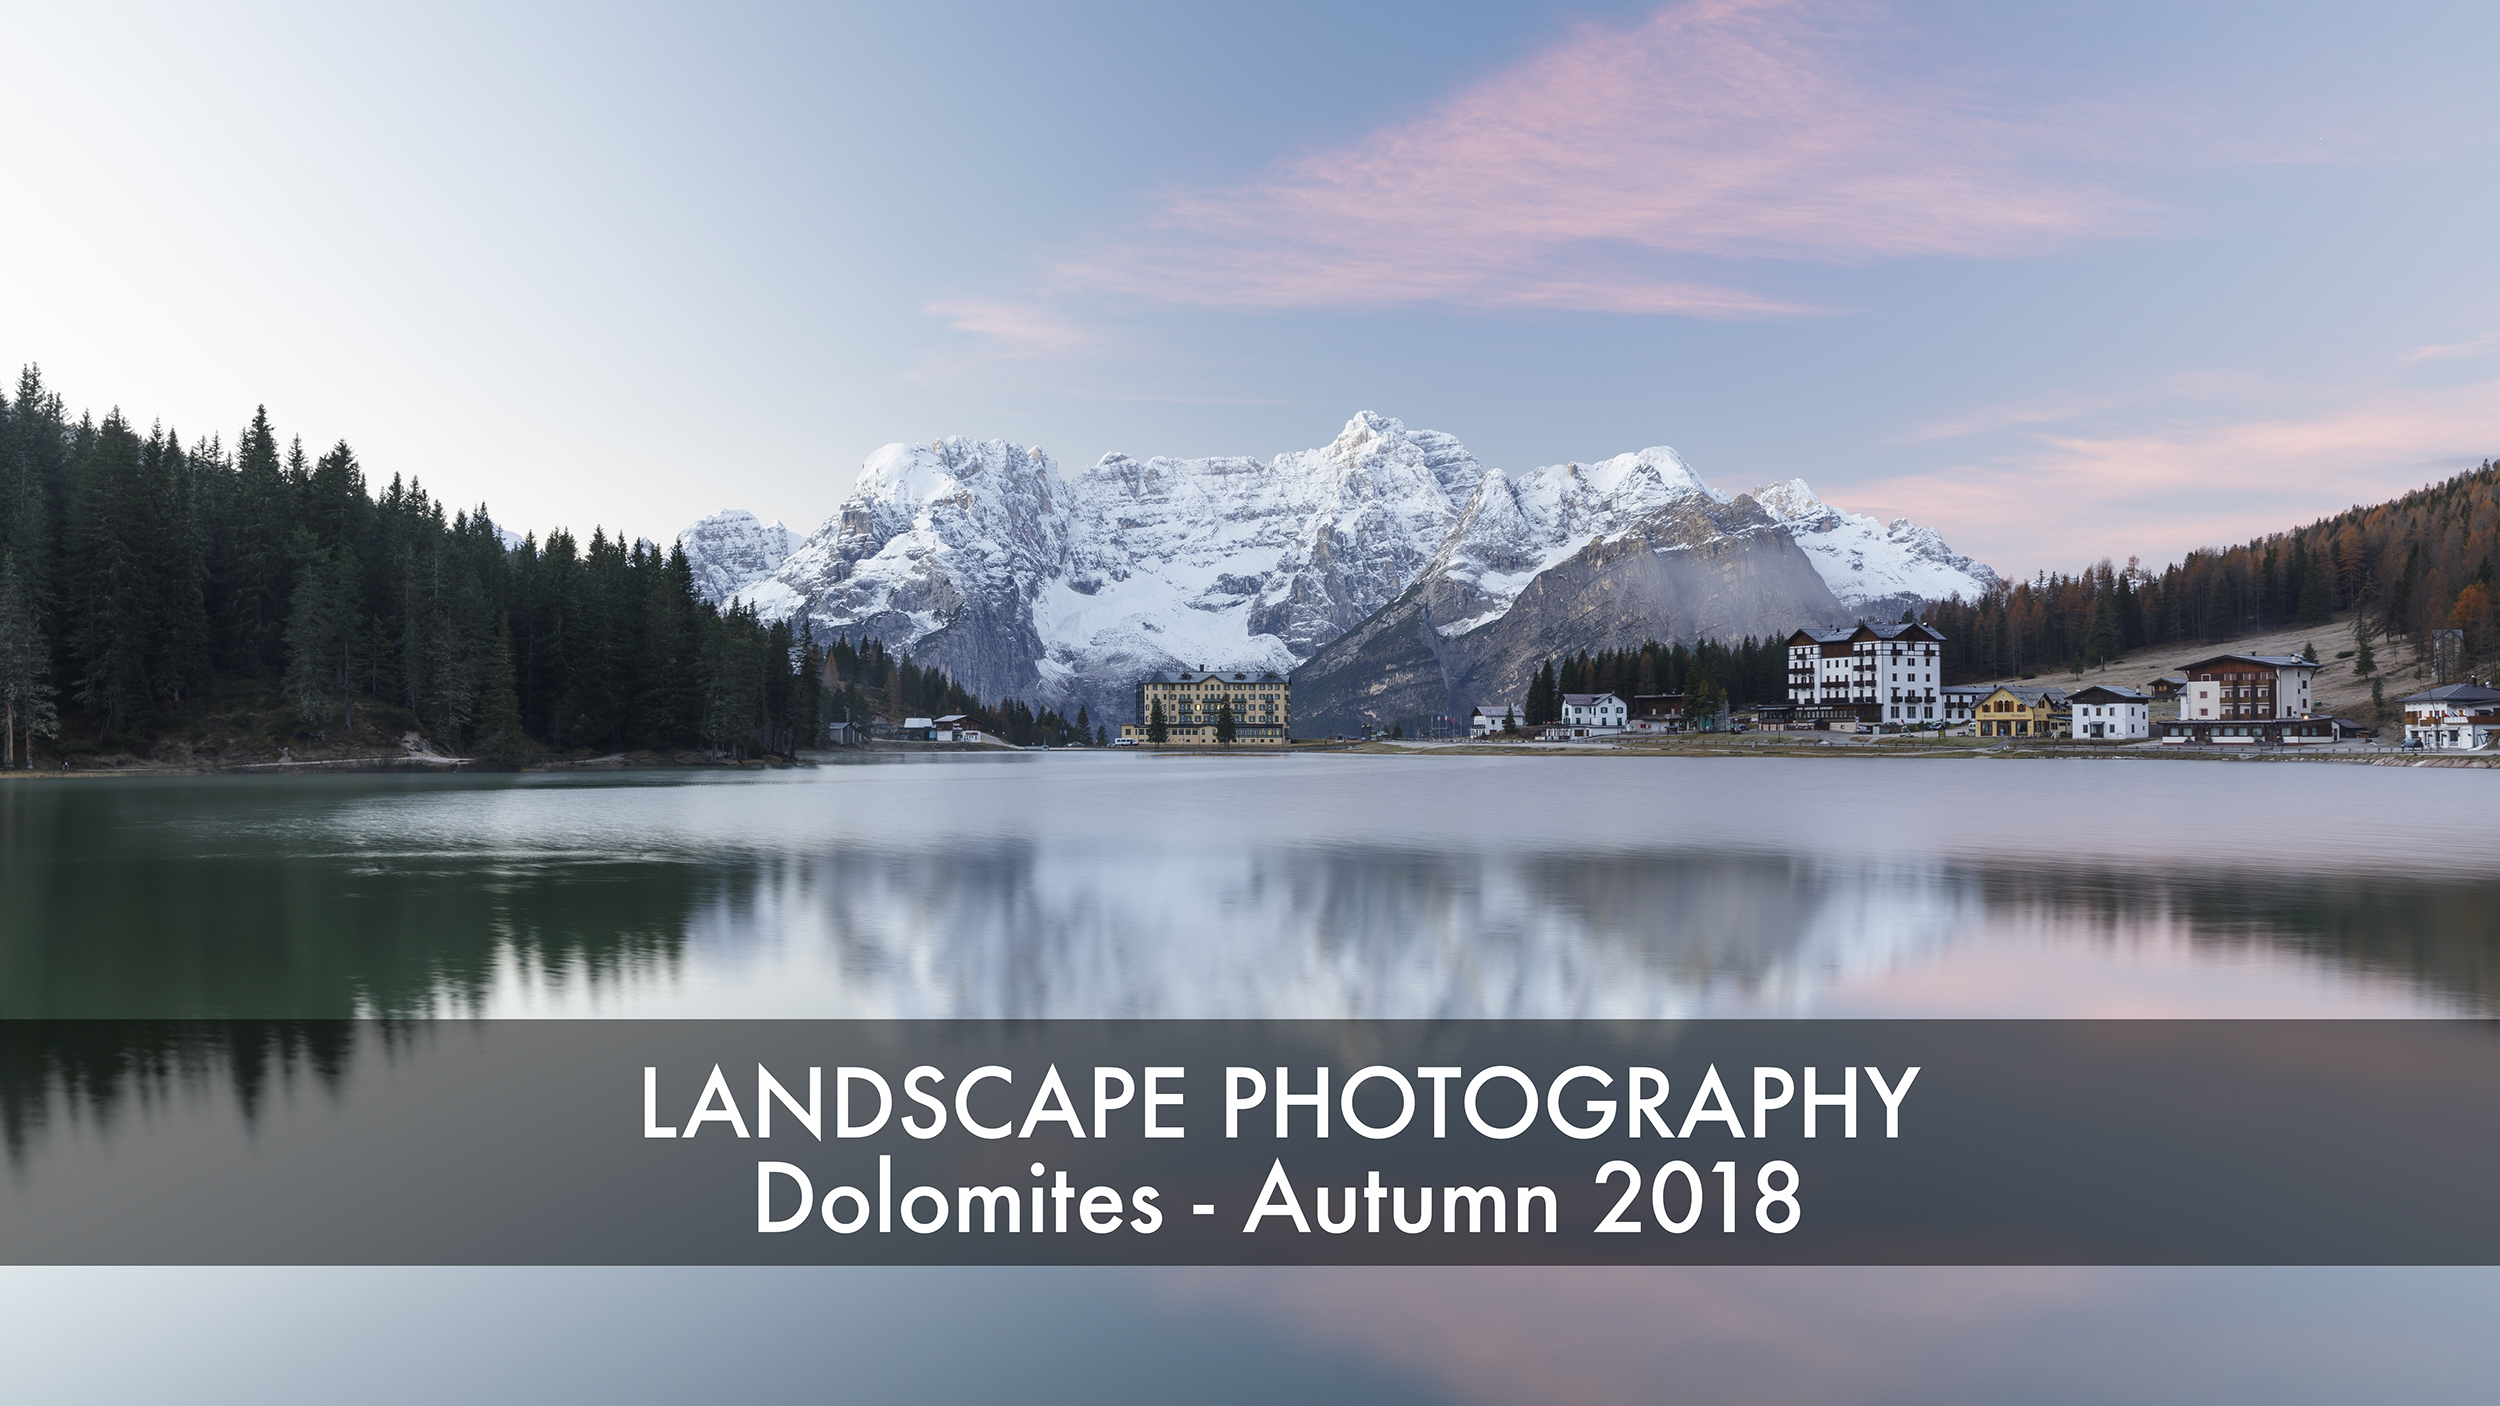 Dolomites landscape photography. Autumn 2018.